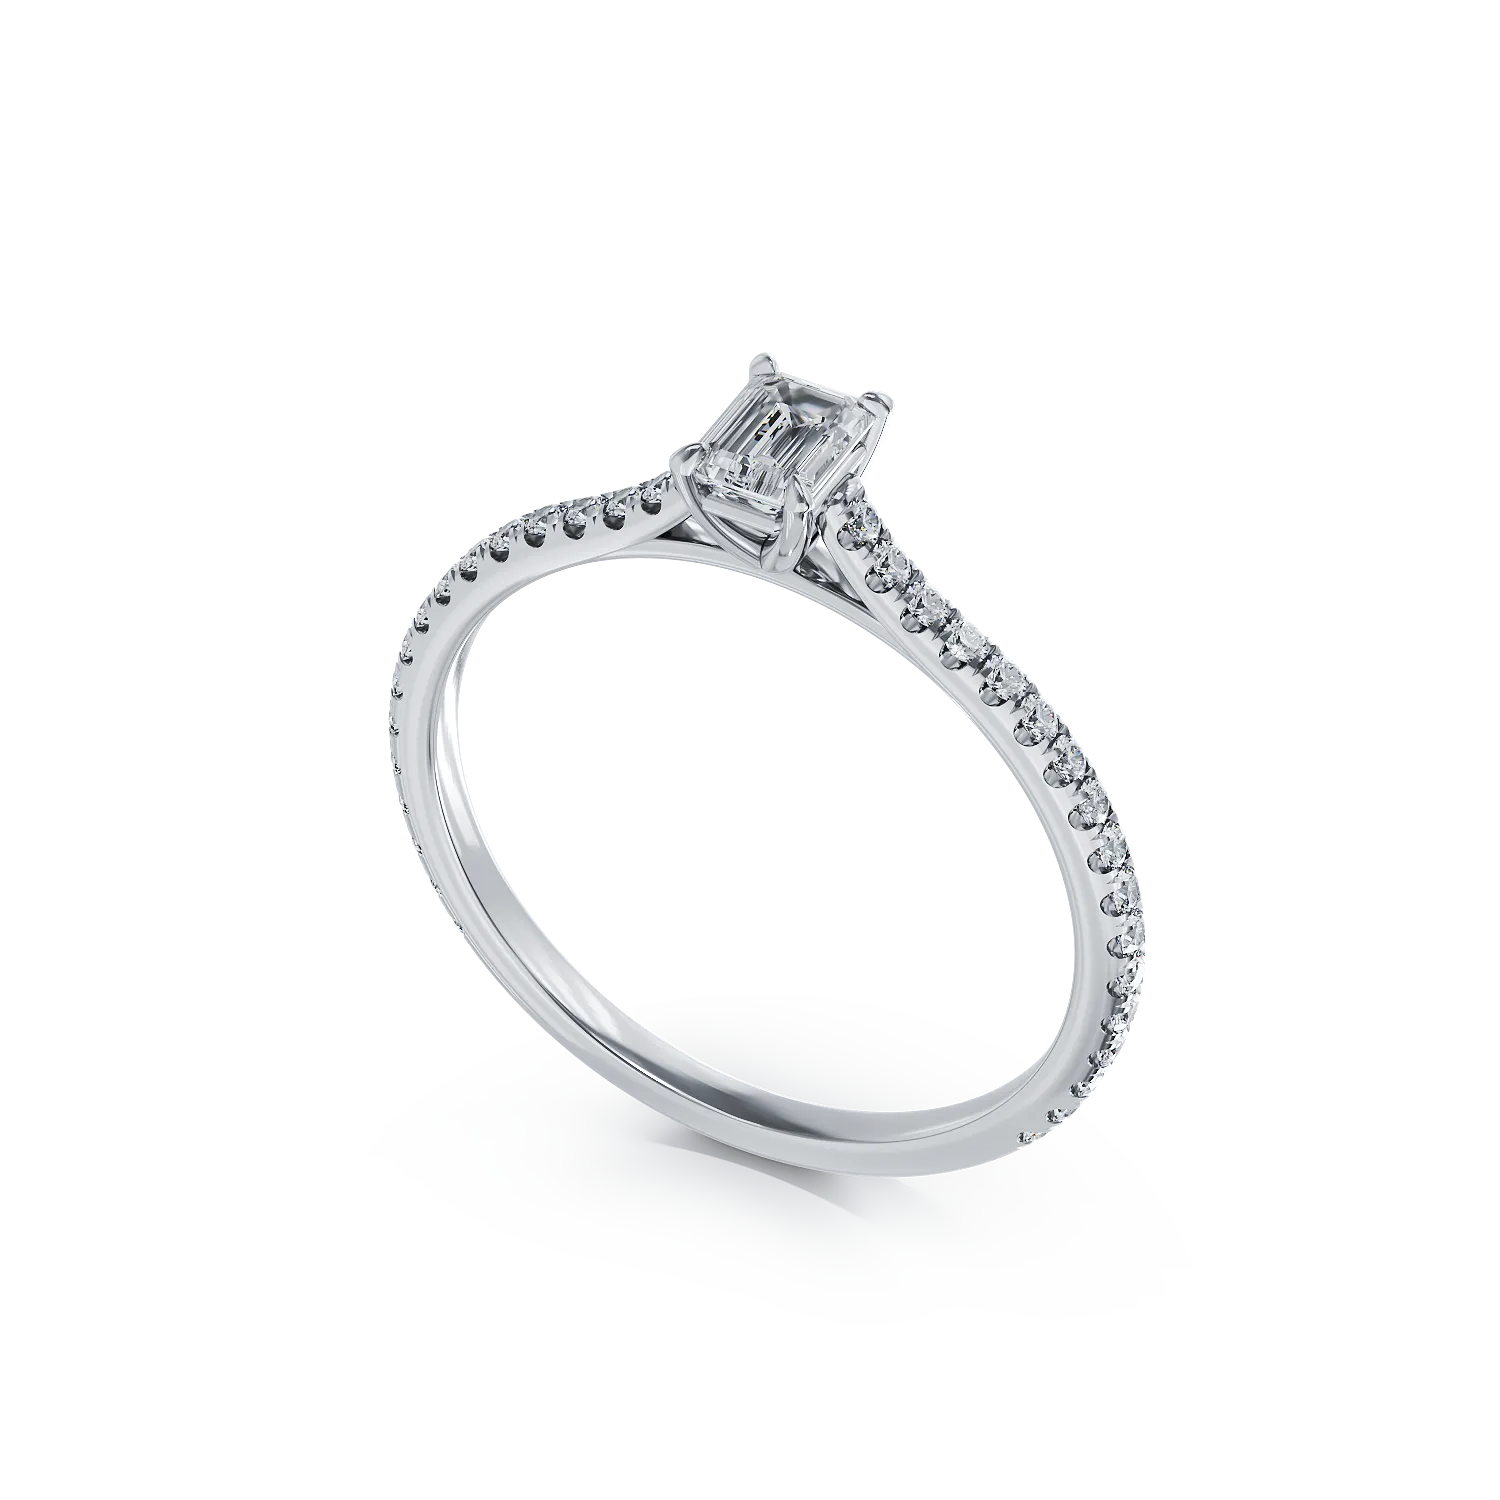 Platinum engagement ring with 0.25ct diamond and 0.21ct diamonds